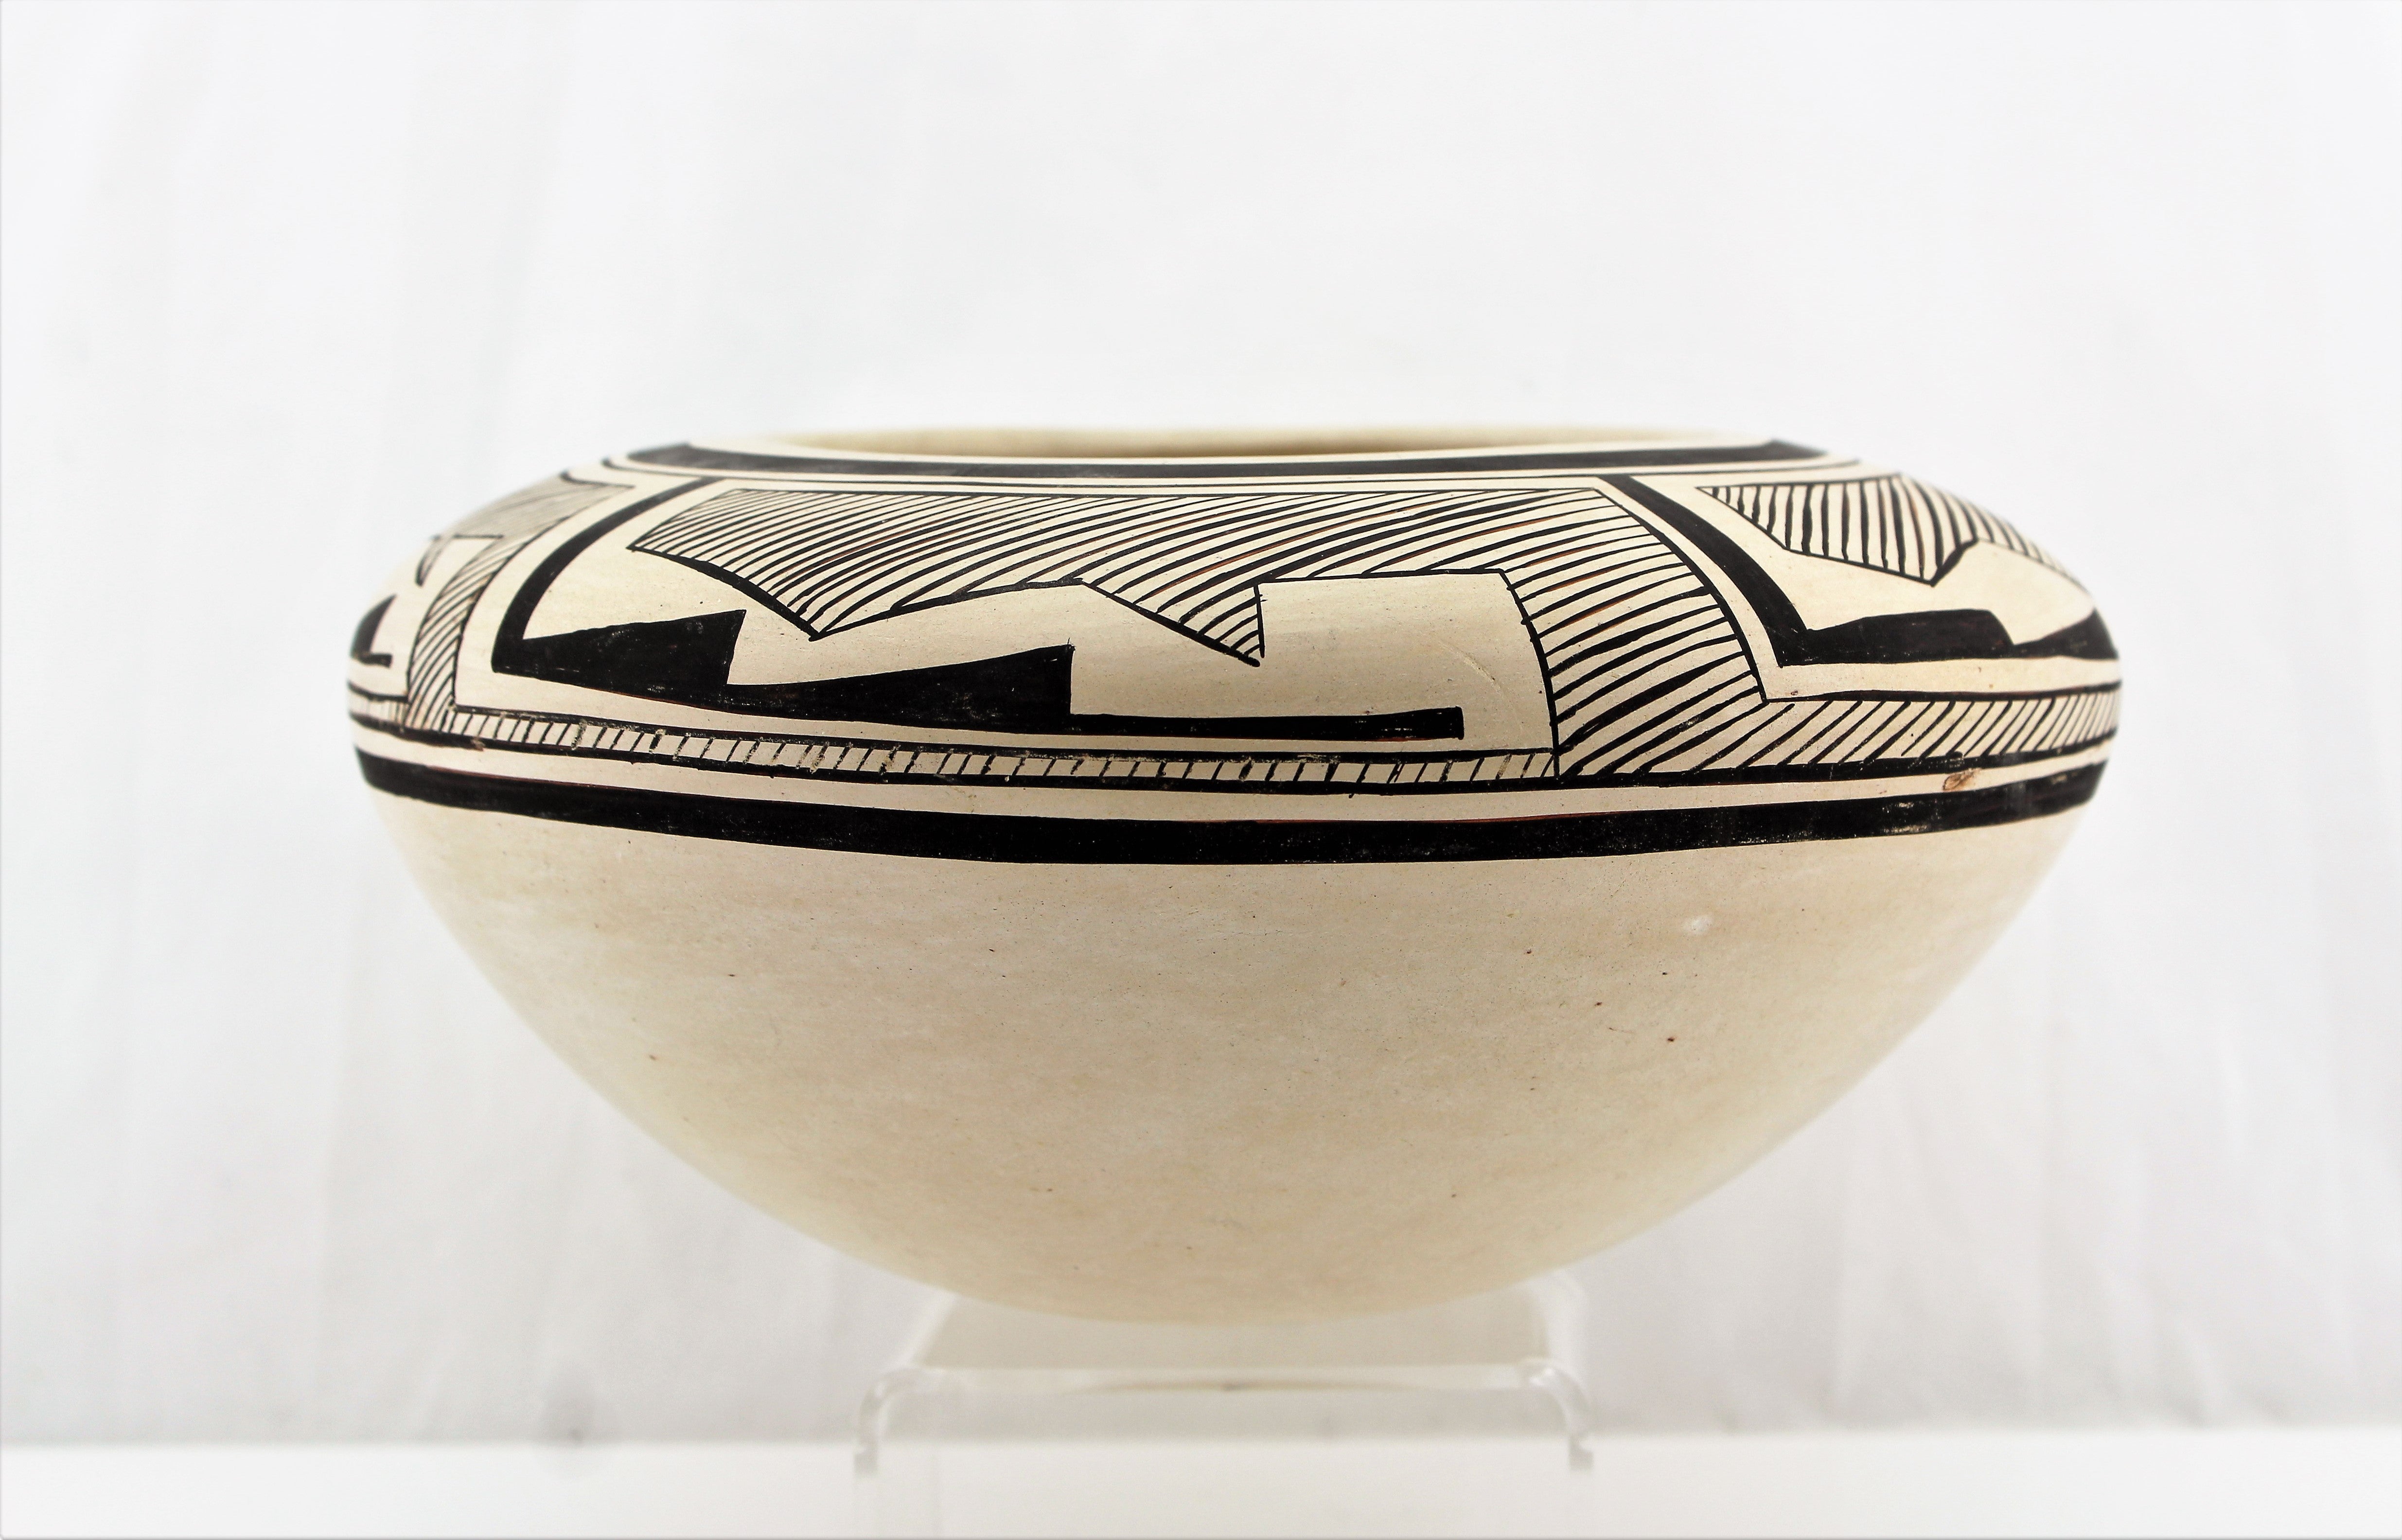 Anasazi Style Hopi Tewa Pottery Bowl